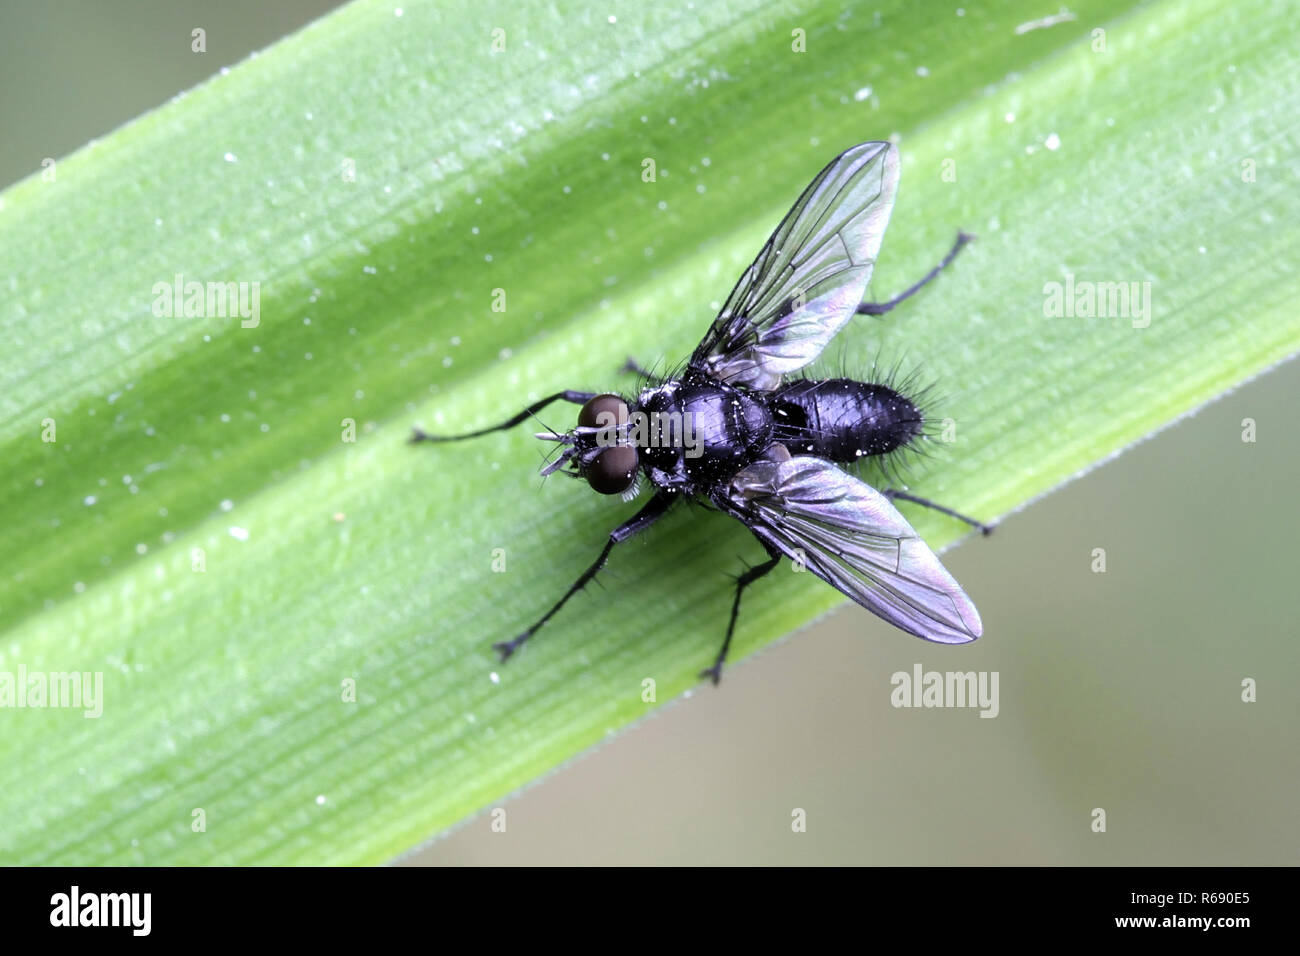 Melanomya nana, Little Black Blowfly Stock Photo